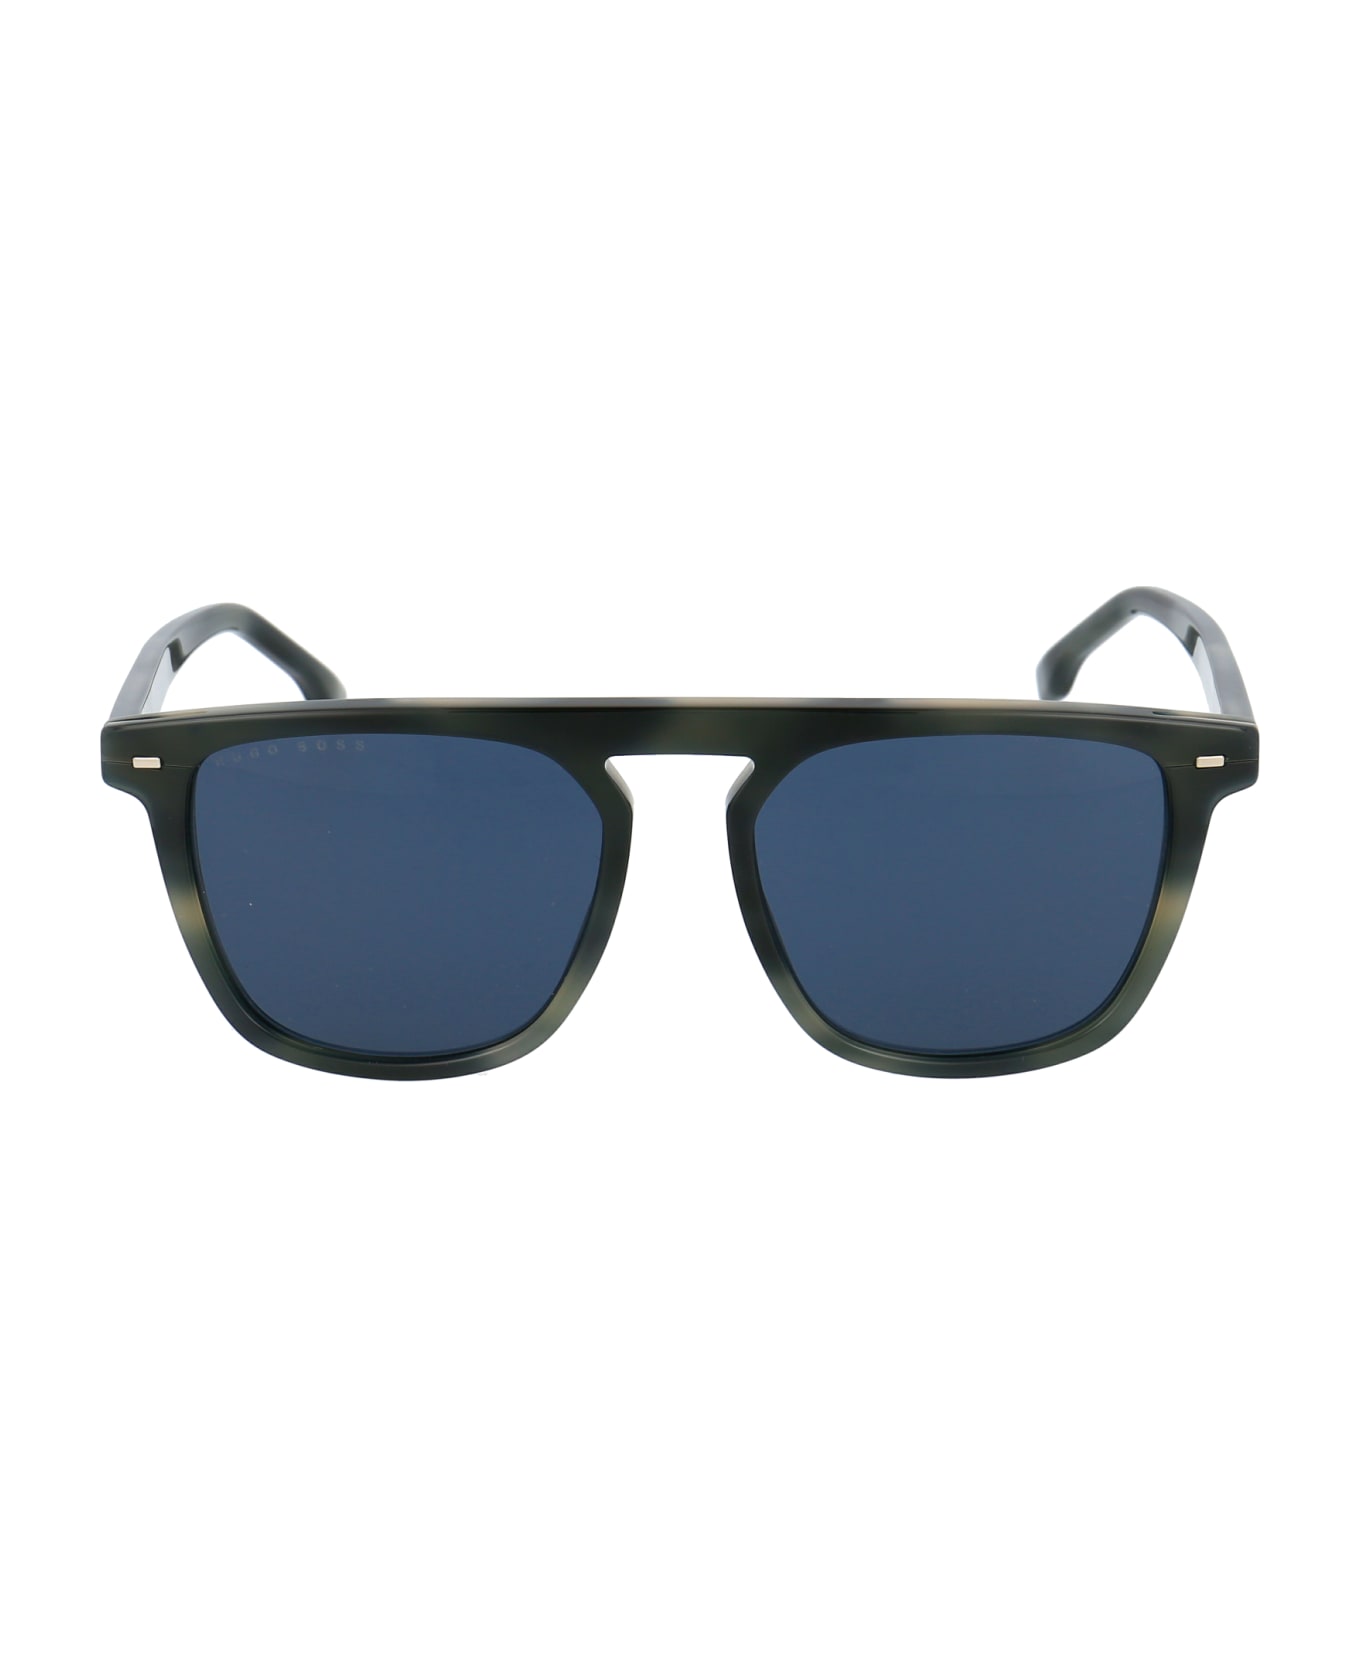 Hugo Boss Boss 1127/s Sunglasses - ACIKU GRY HAVANA